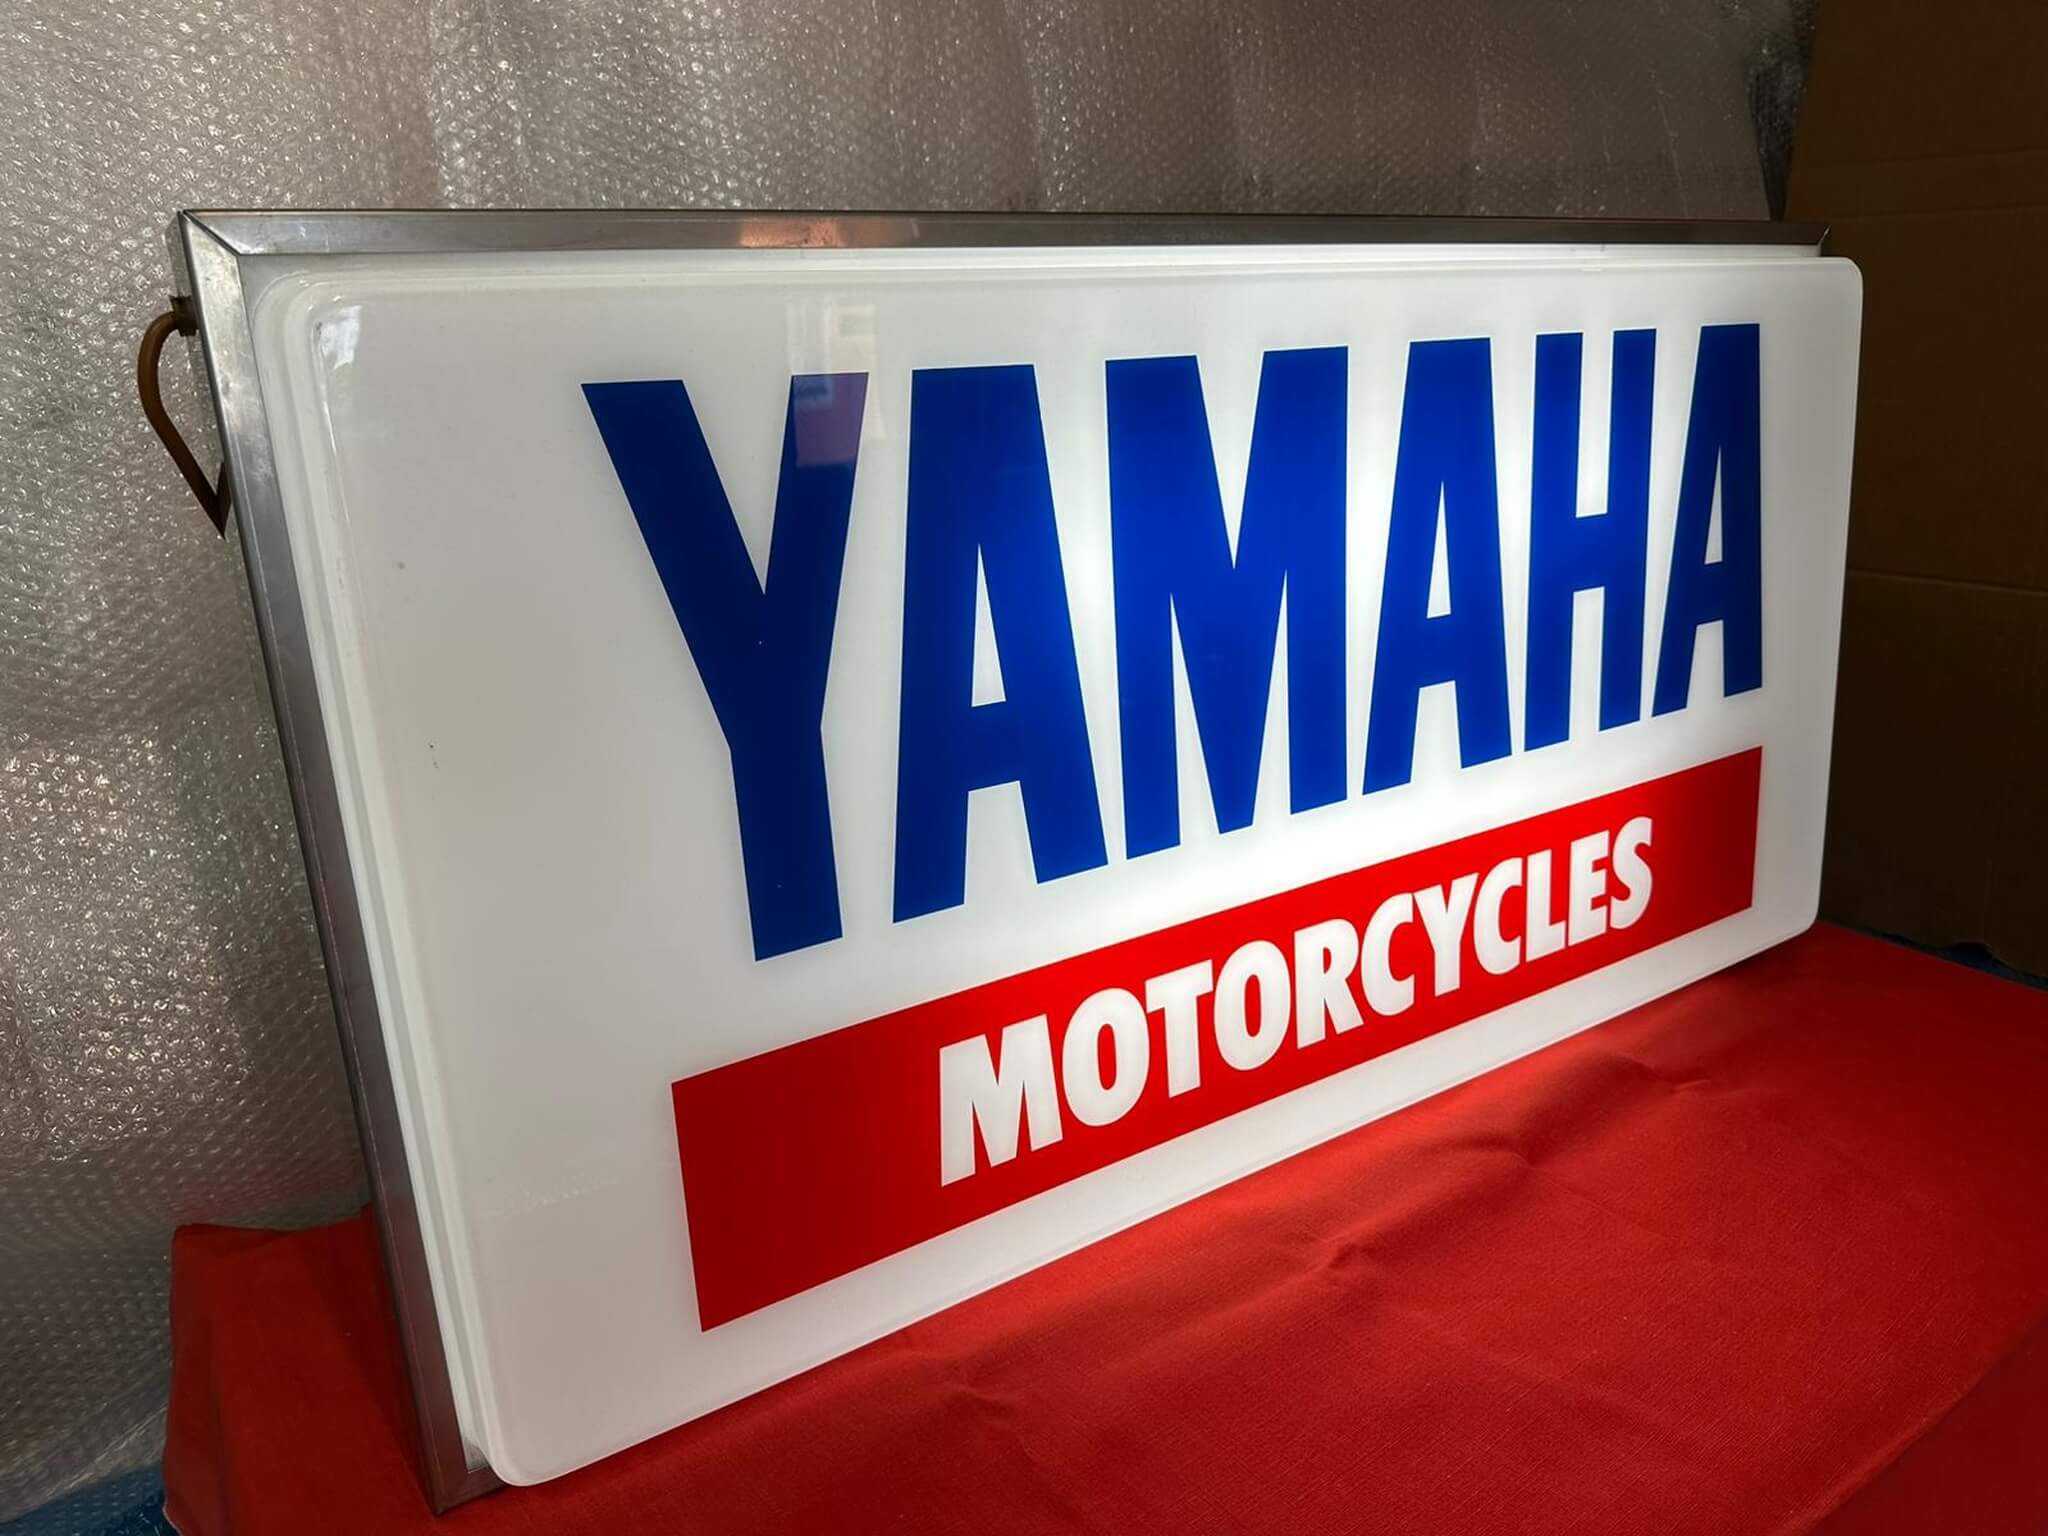  80's Illuminated Yamaha Sign